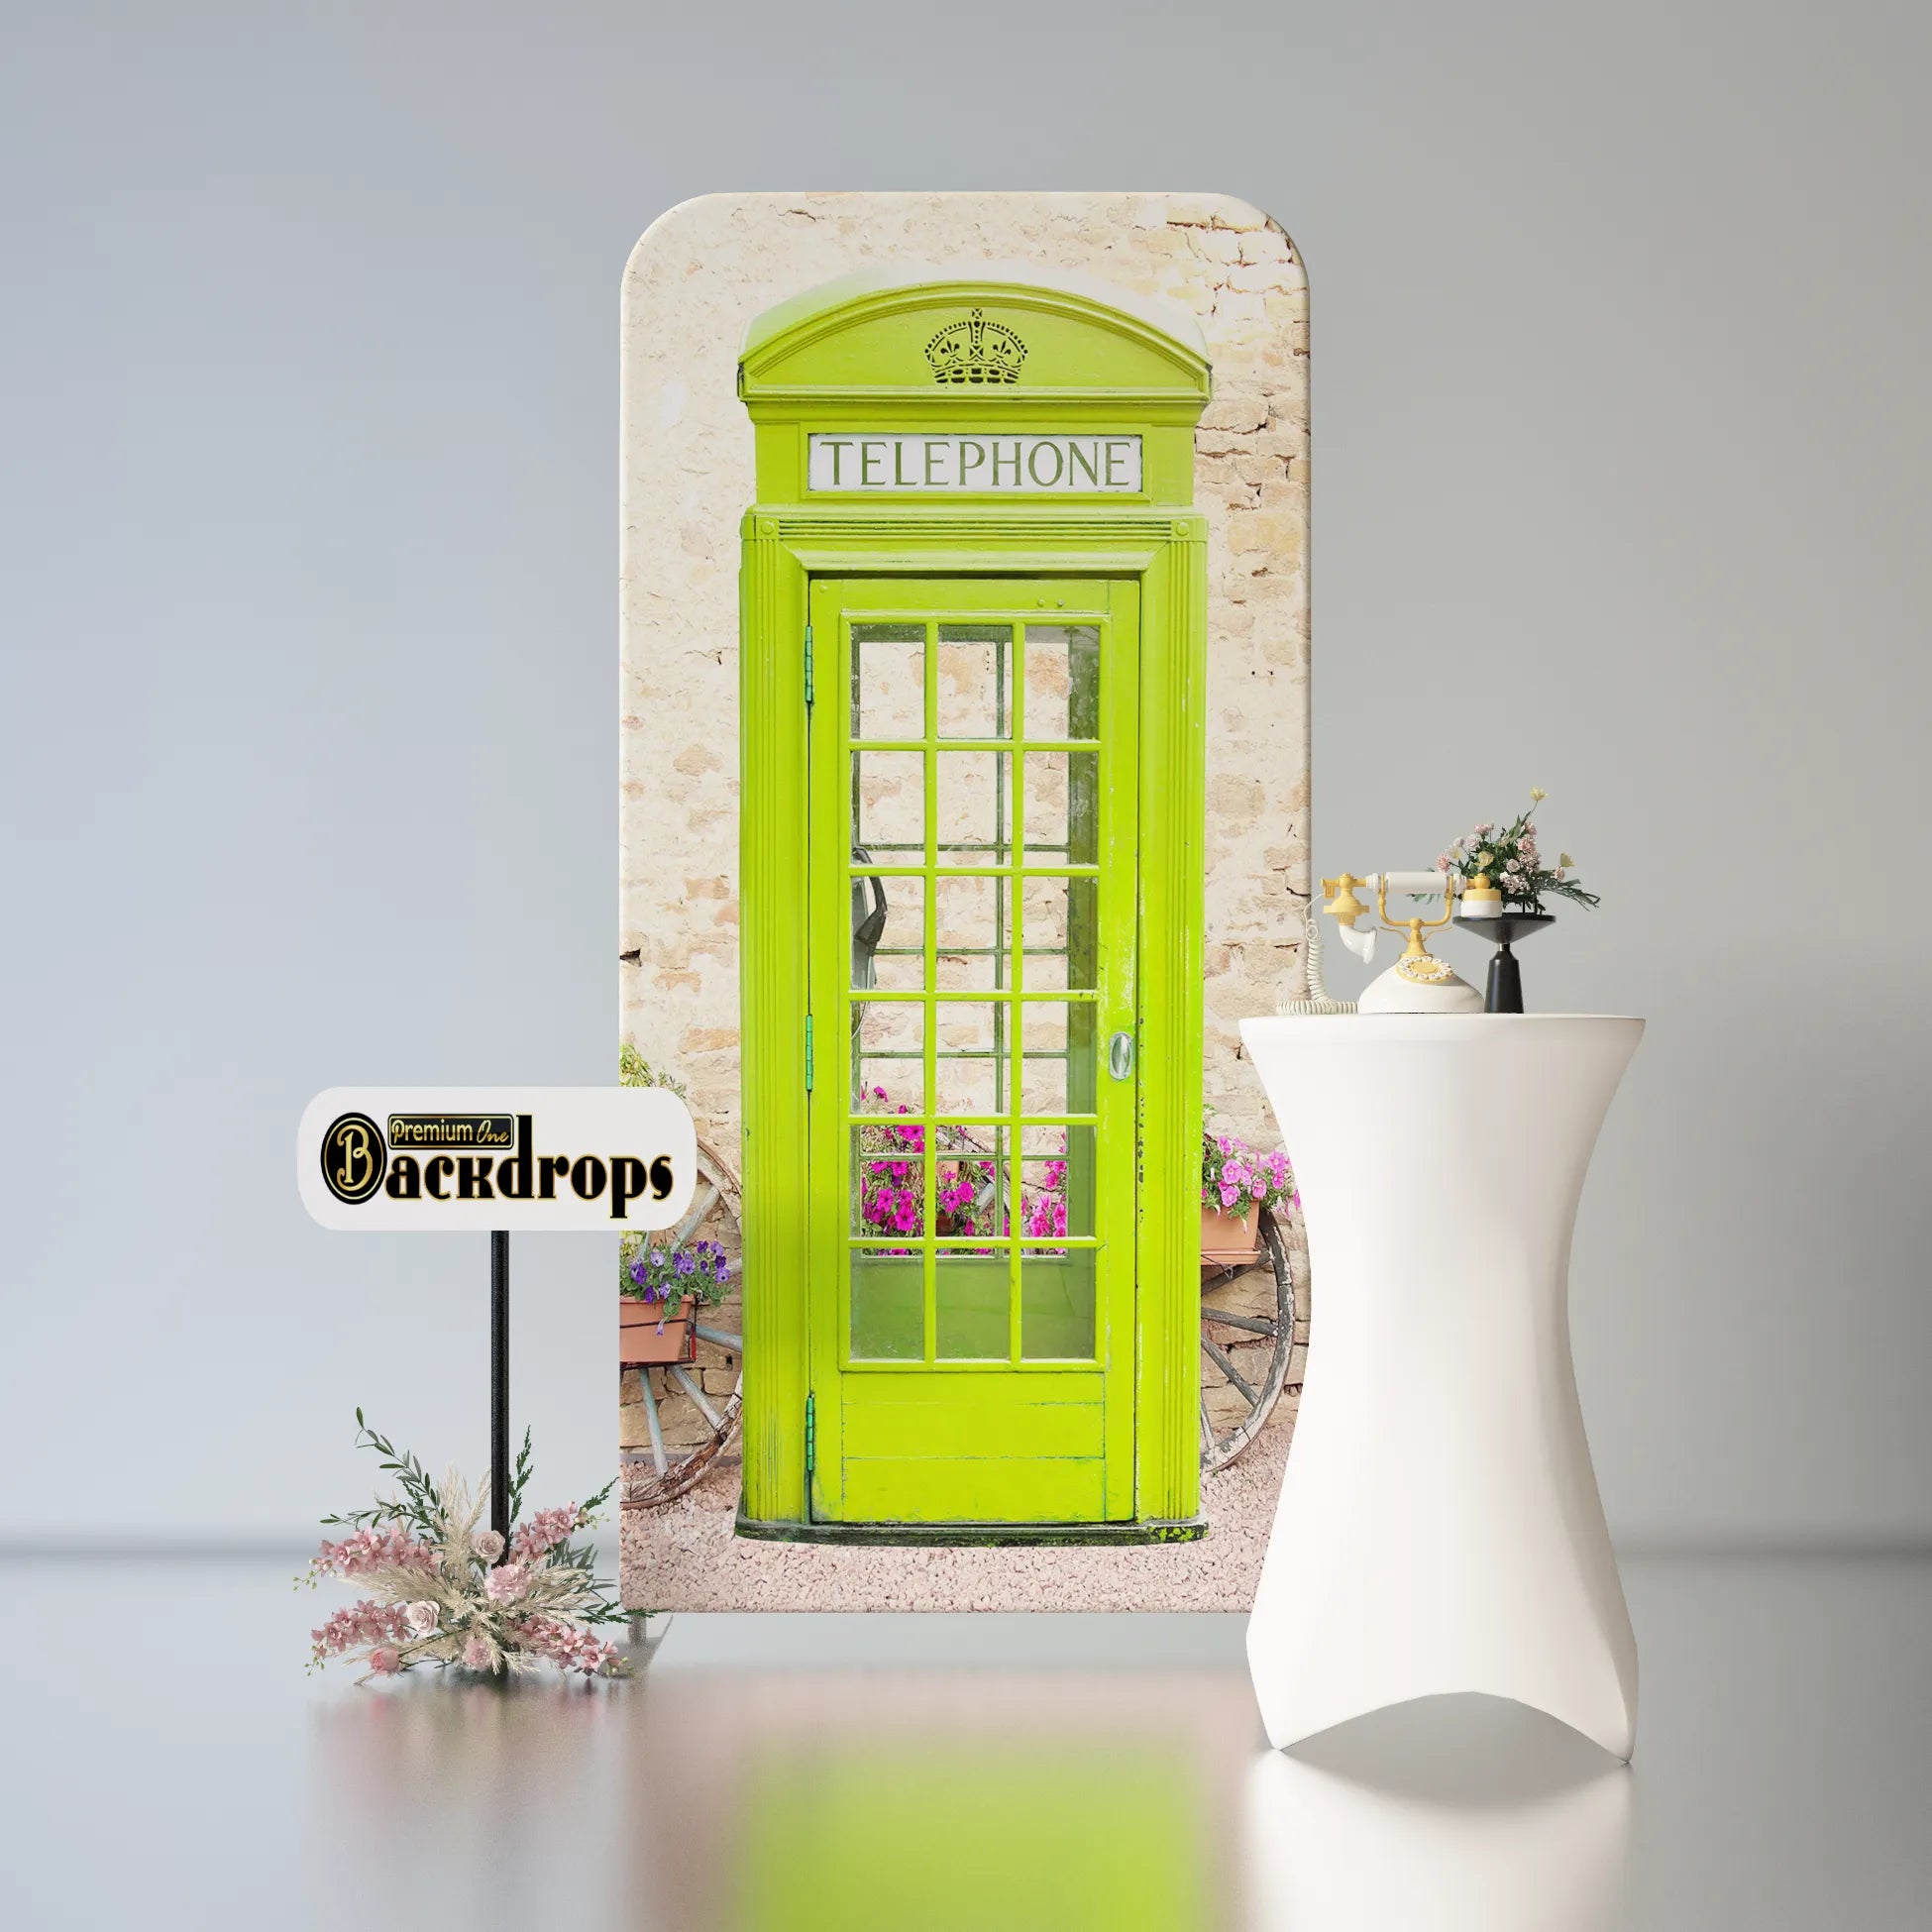 Telephone Booth Design 36